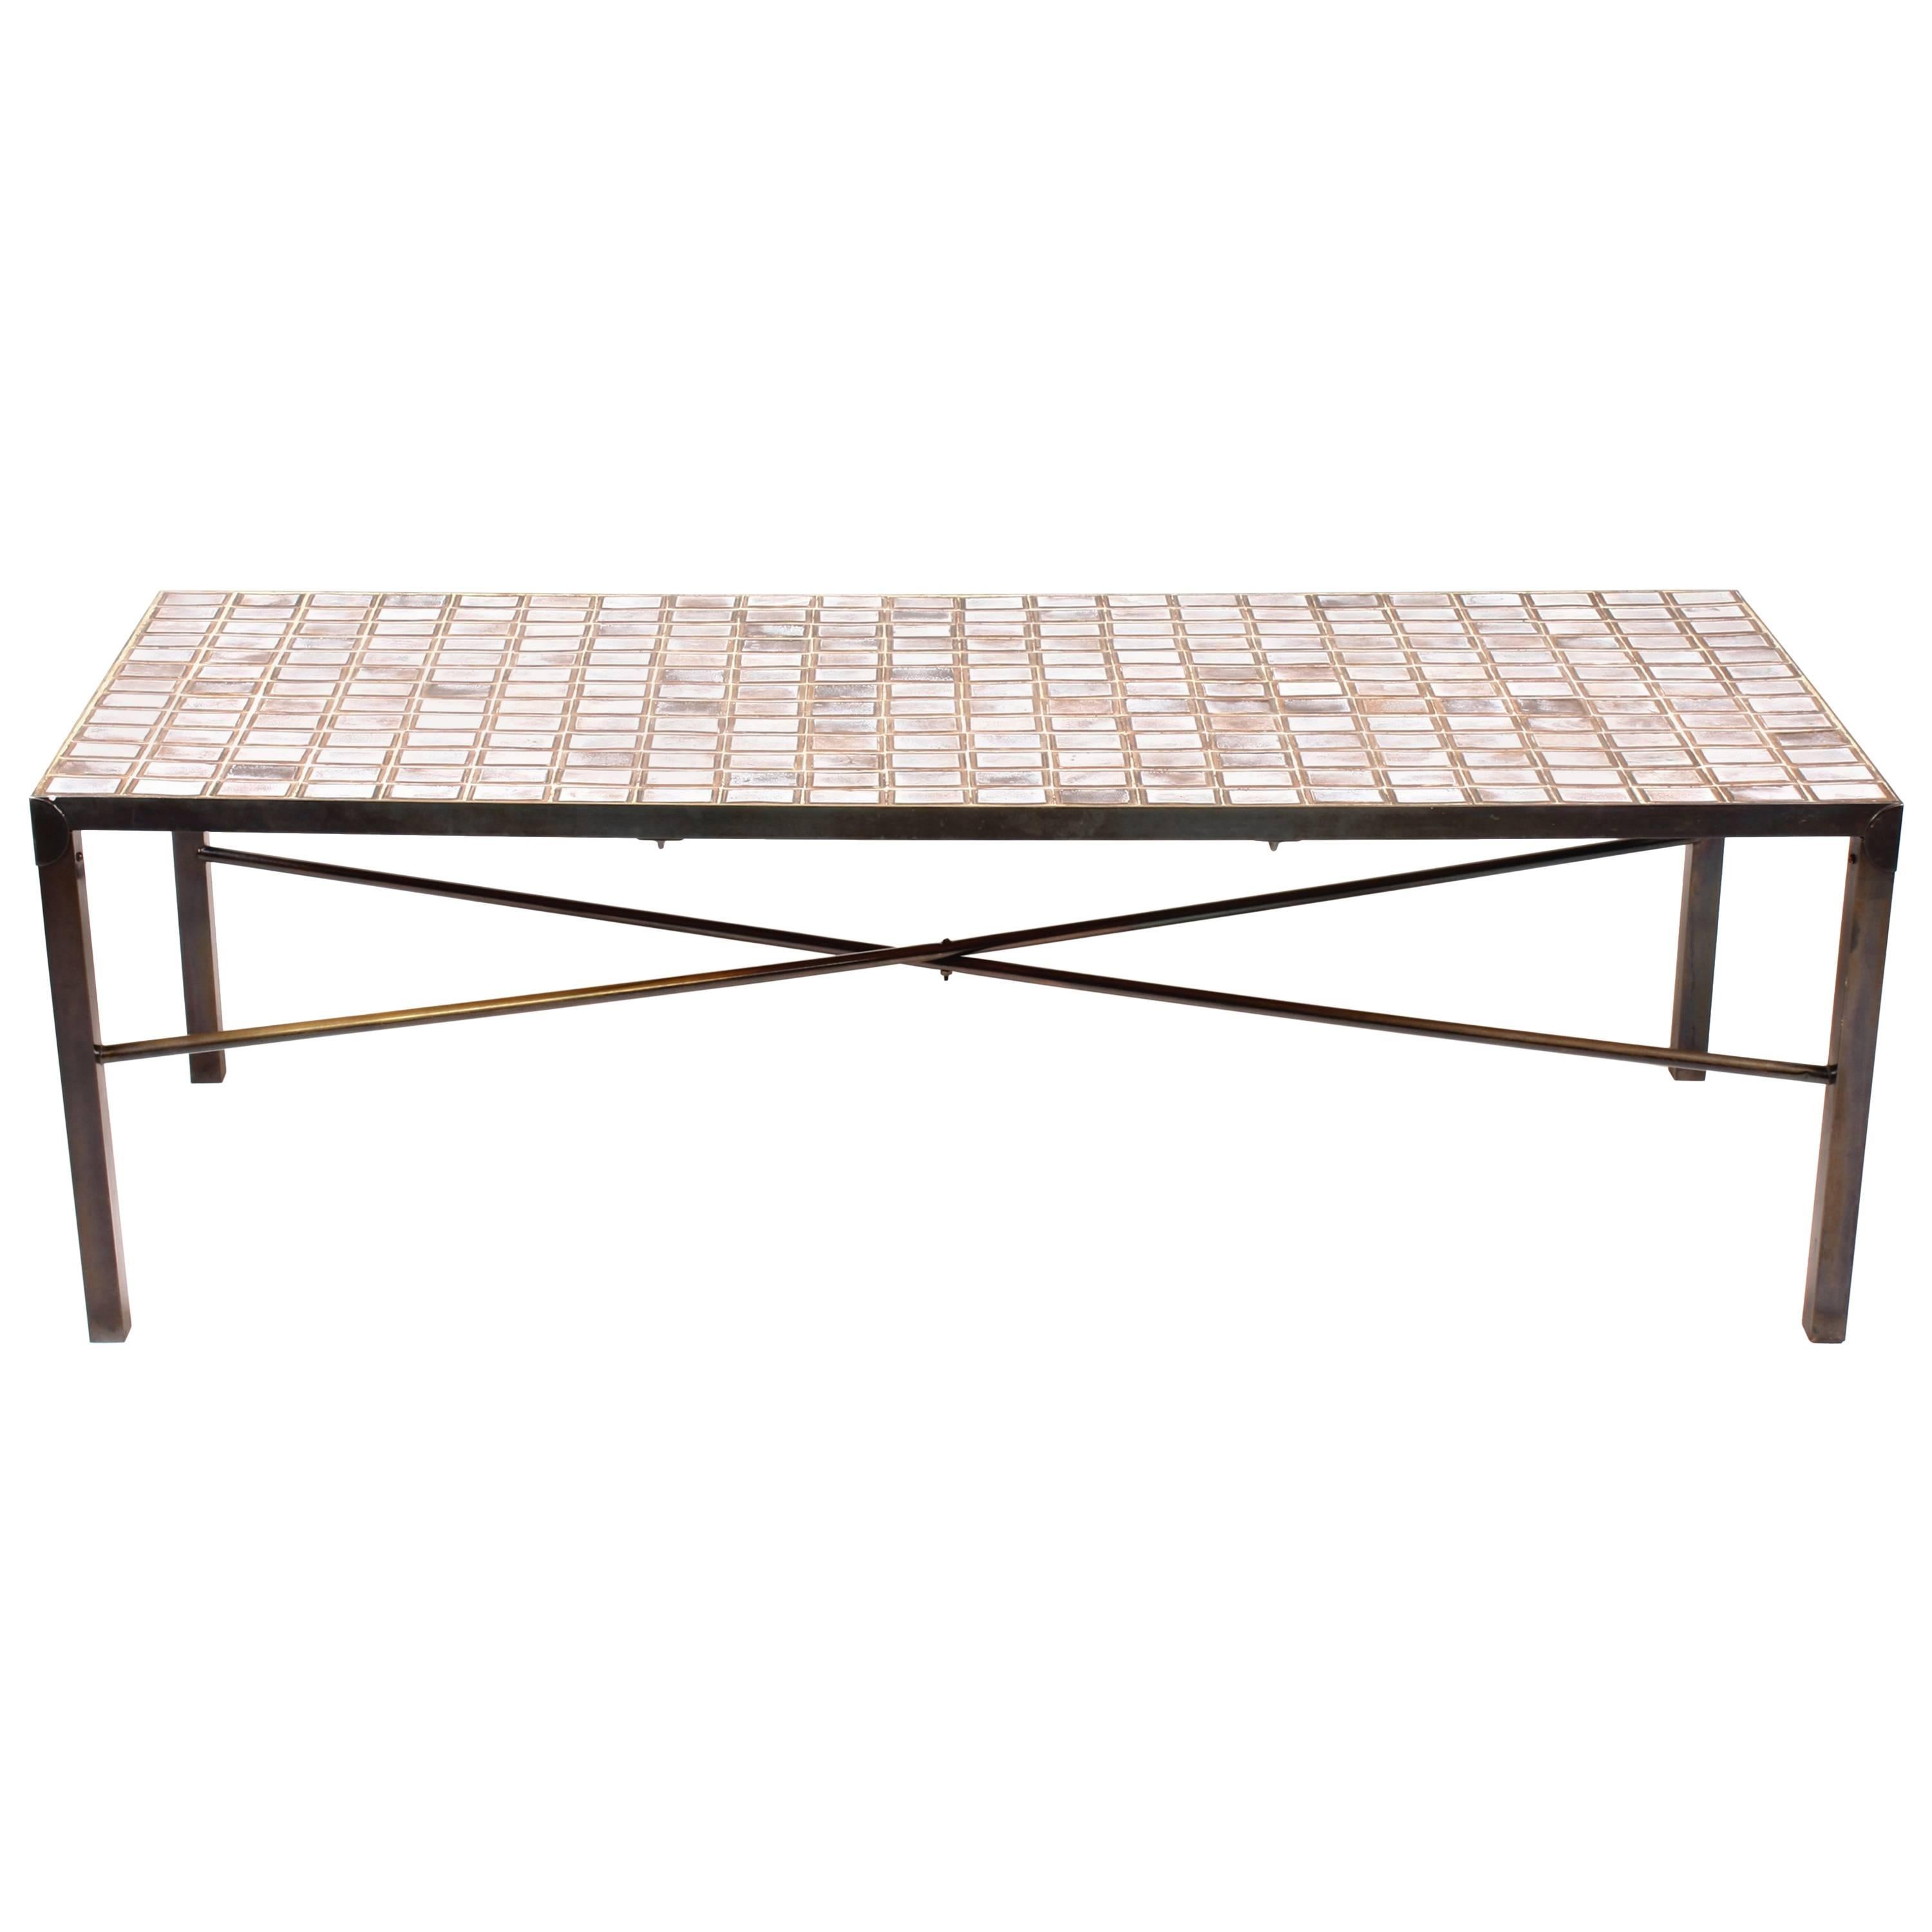 Dainsh Tile Top Table